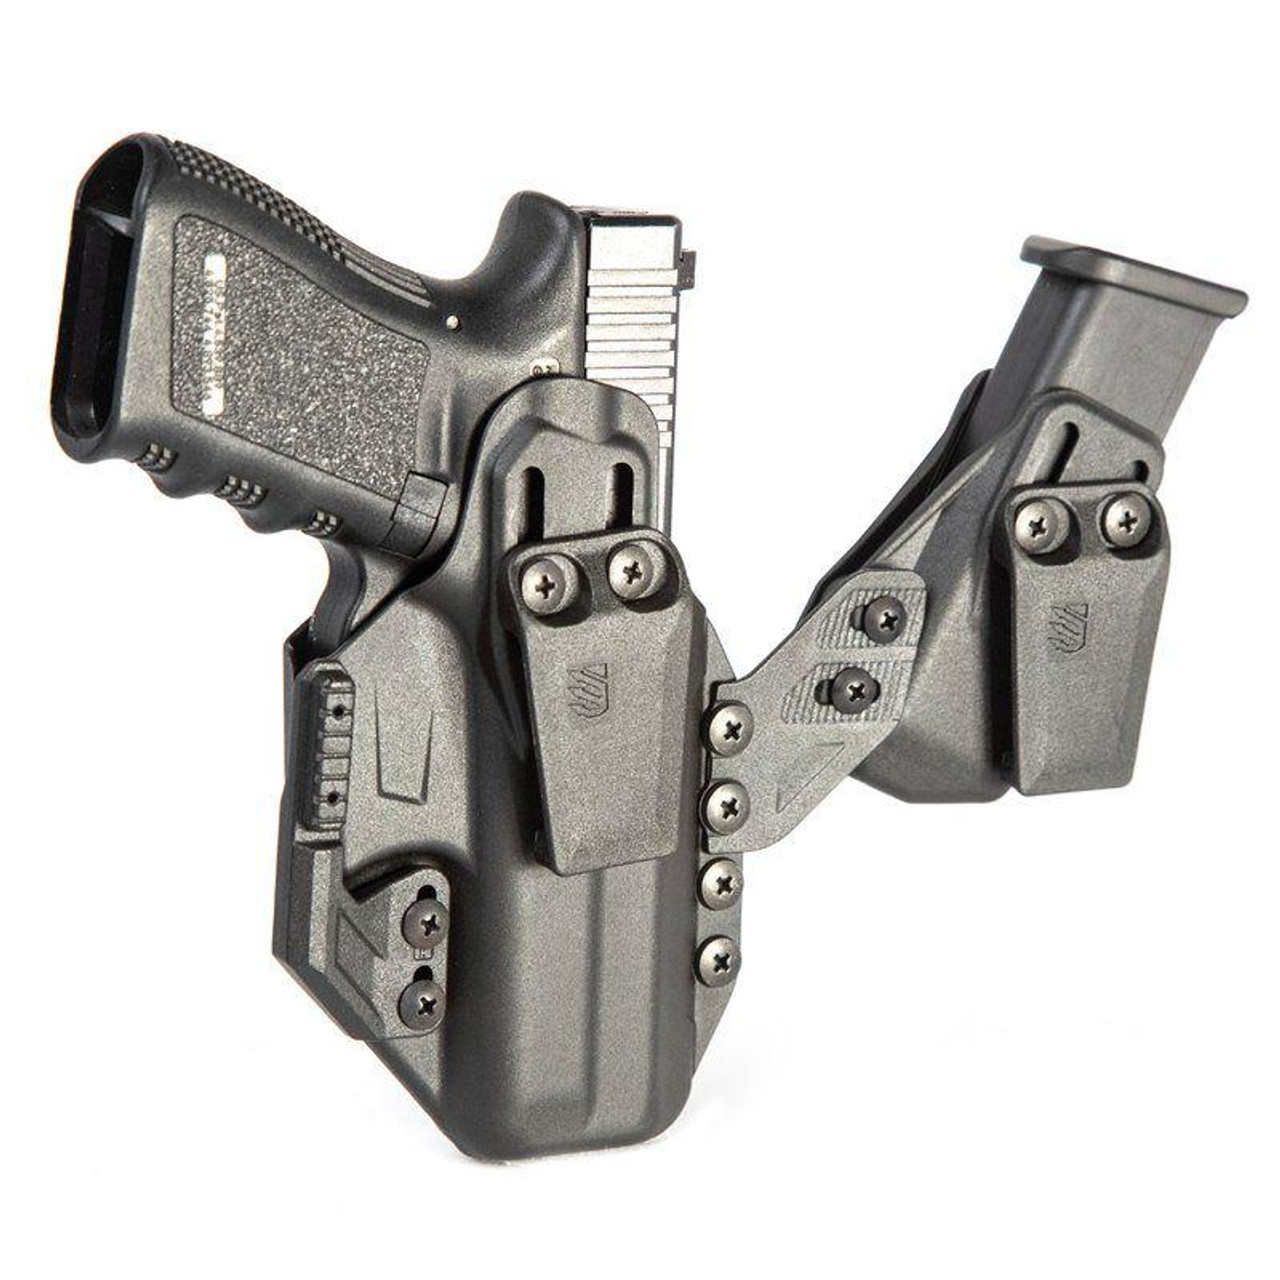 Blackhawk TecGrip IWB Handgun Holster